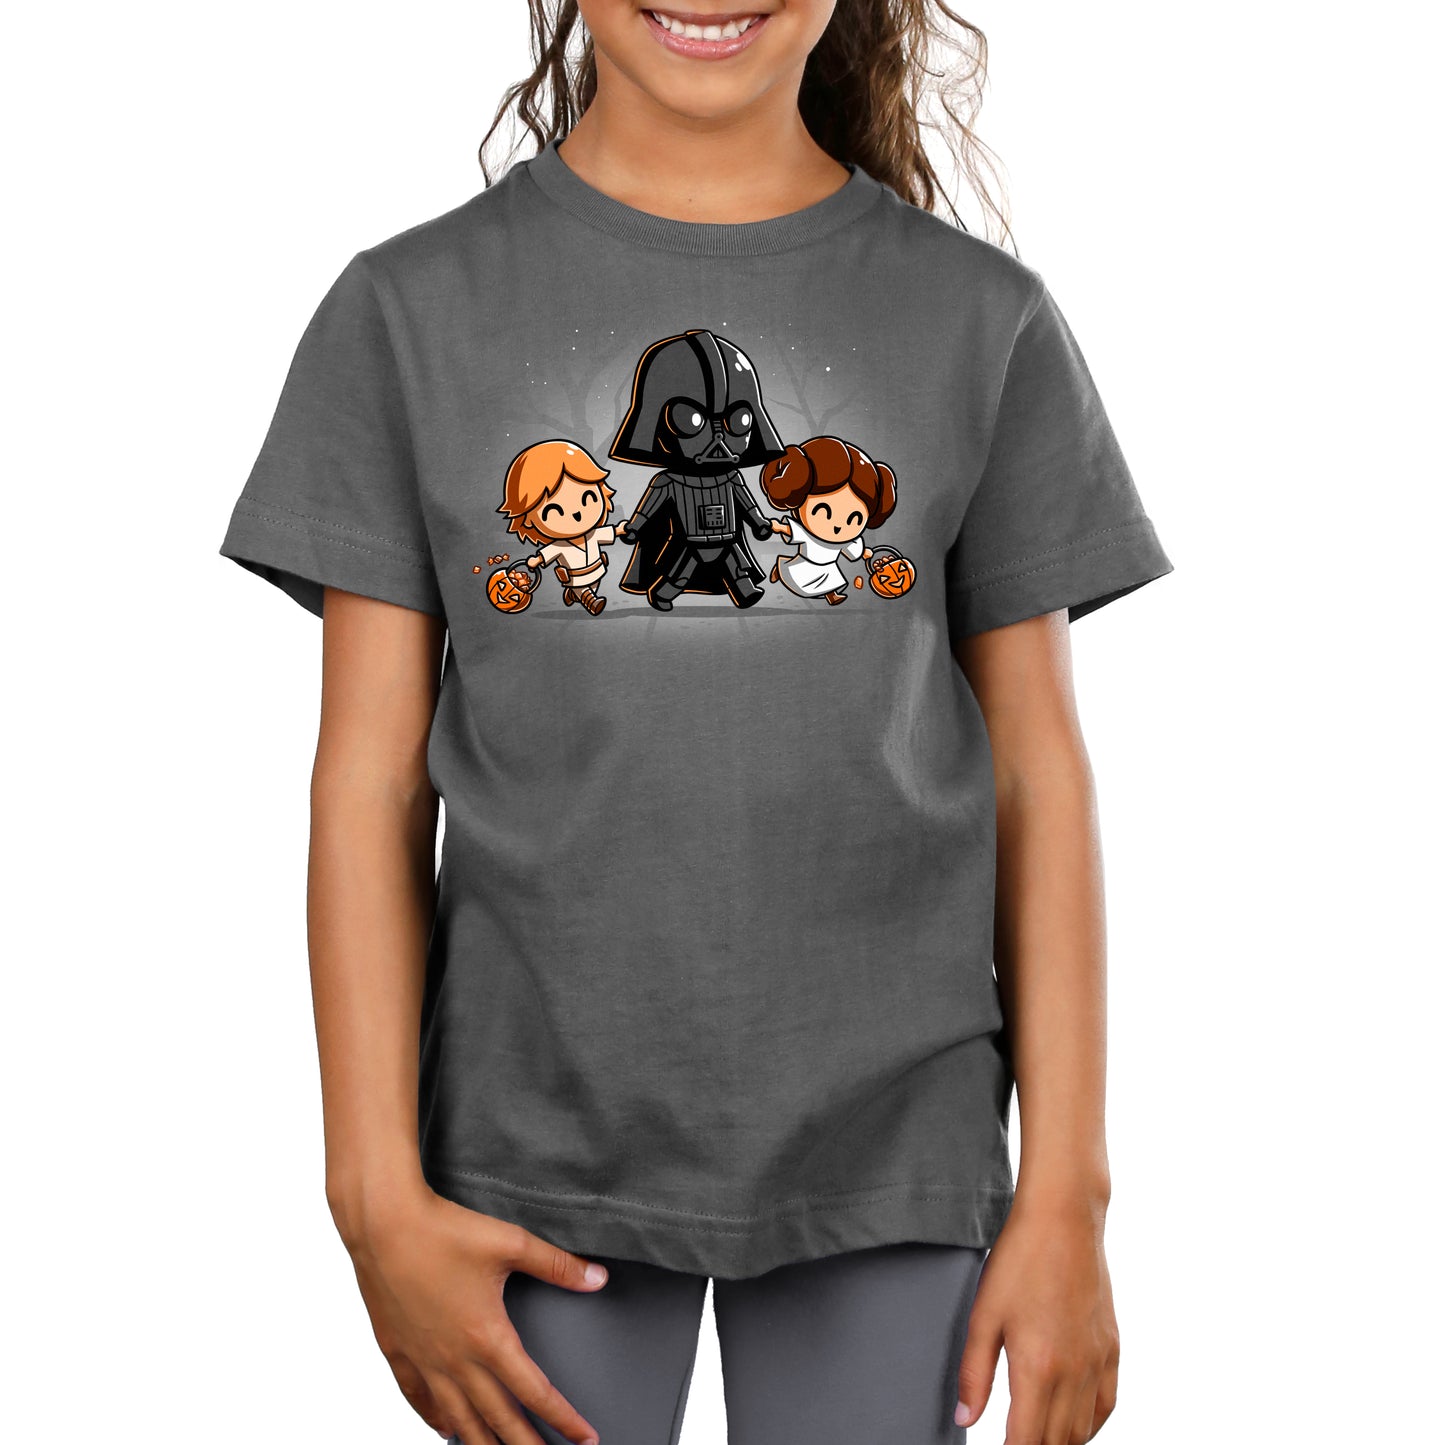 Star Wars Skywalker Family Halloween licensed kids t-shirt.